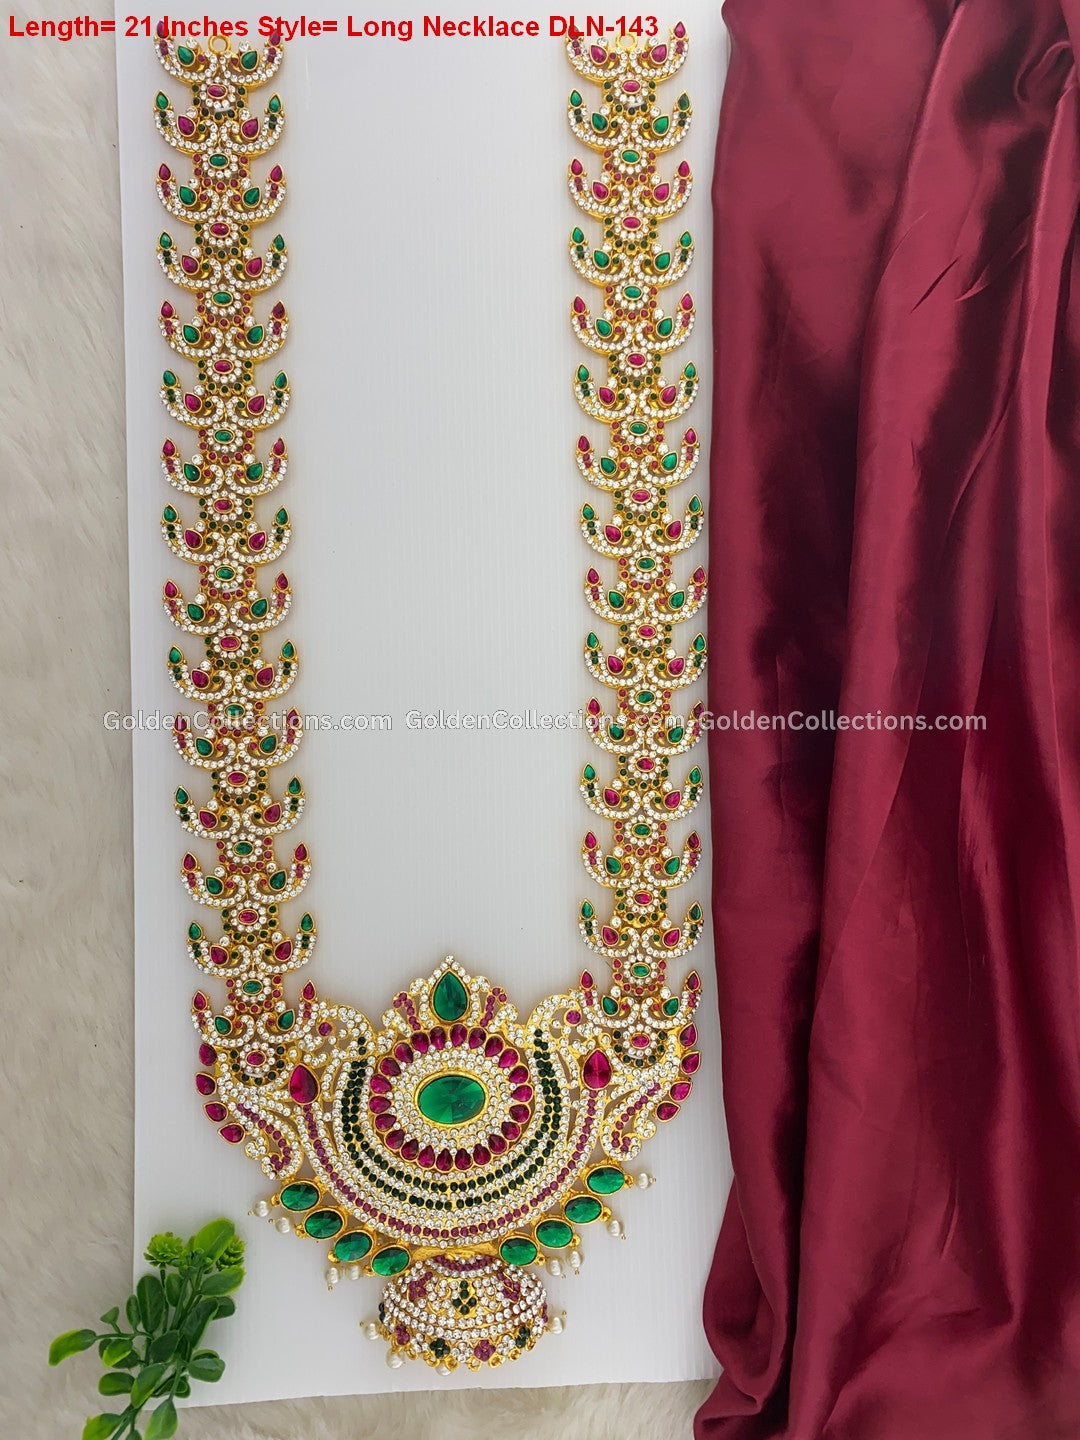 Hindu God Jewellery Set - Deity Stone Necklace DLN-143